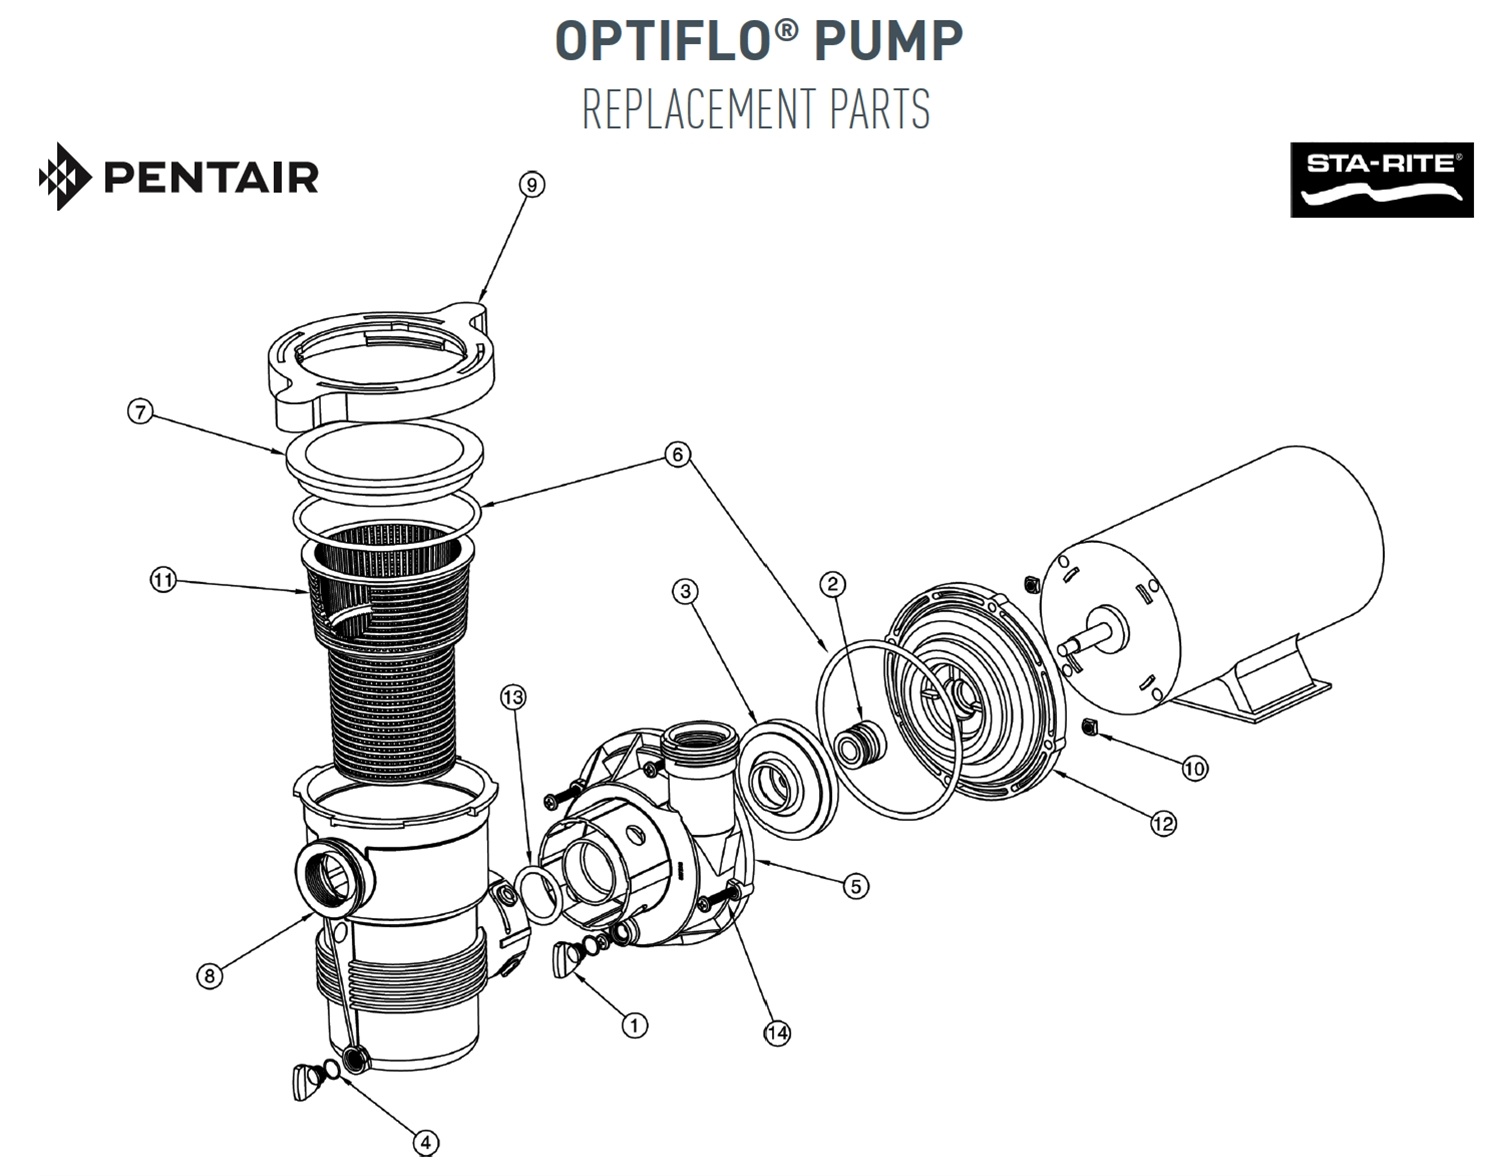 Pentair Sta-Rite Optiflo® Pump Parts